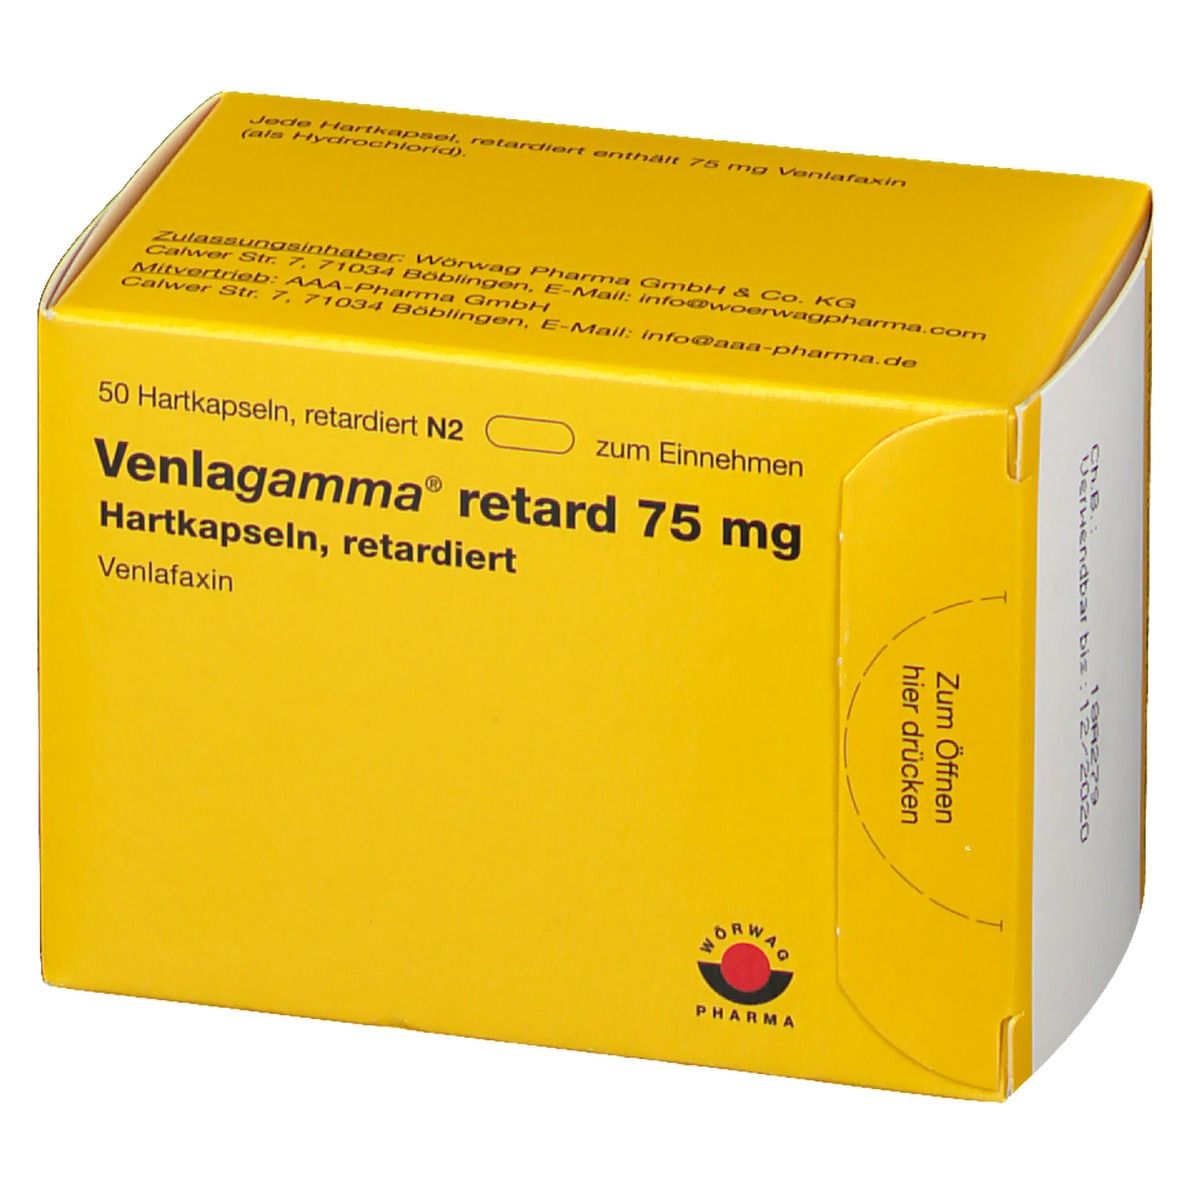 Venlagamma® retard 75 mg